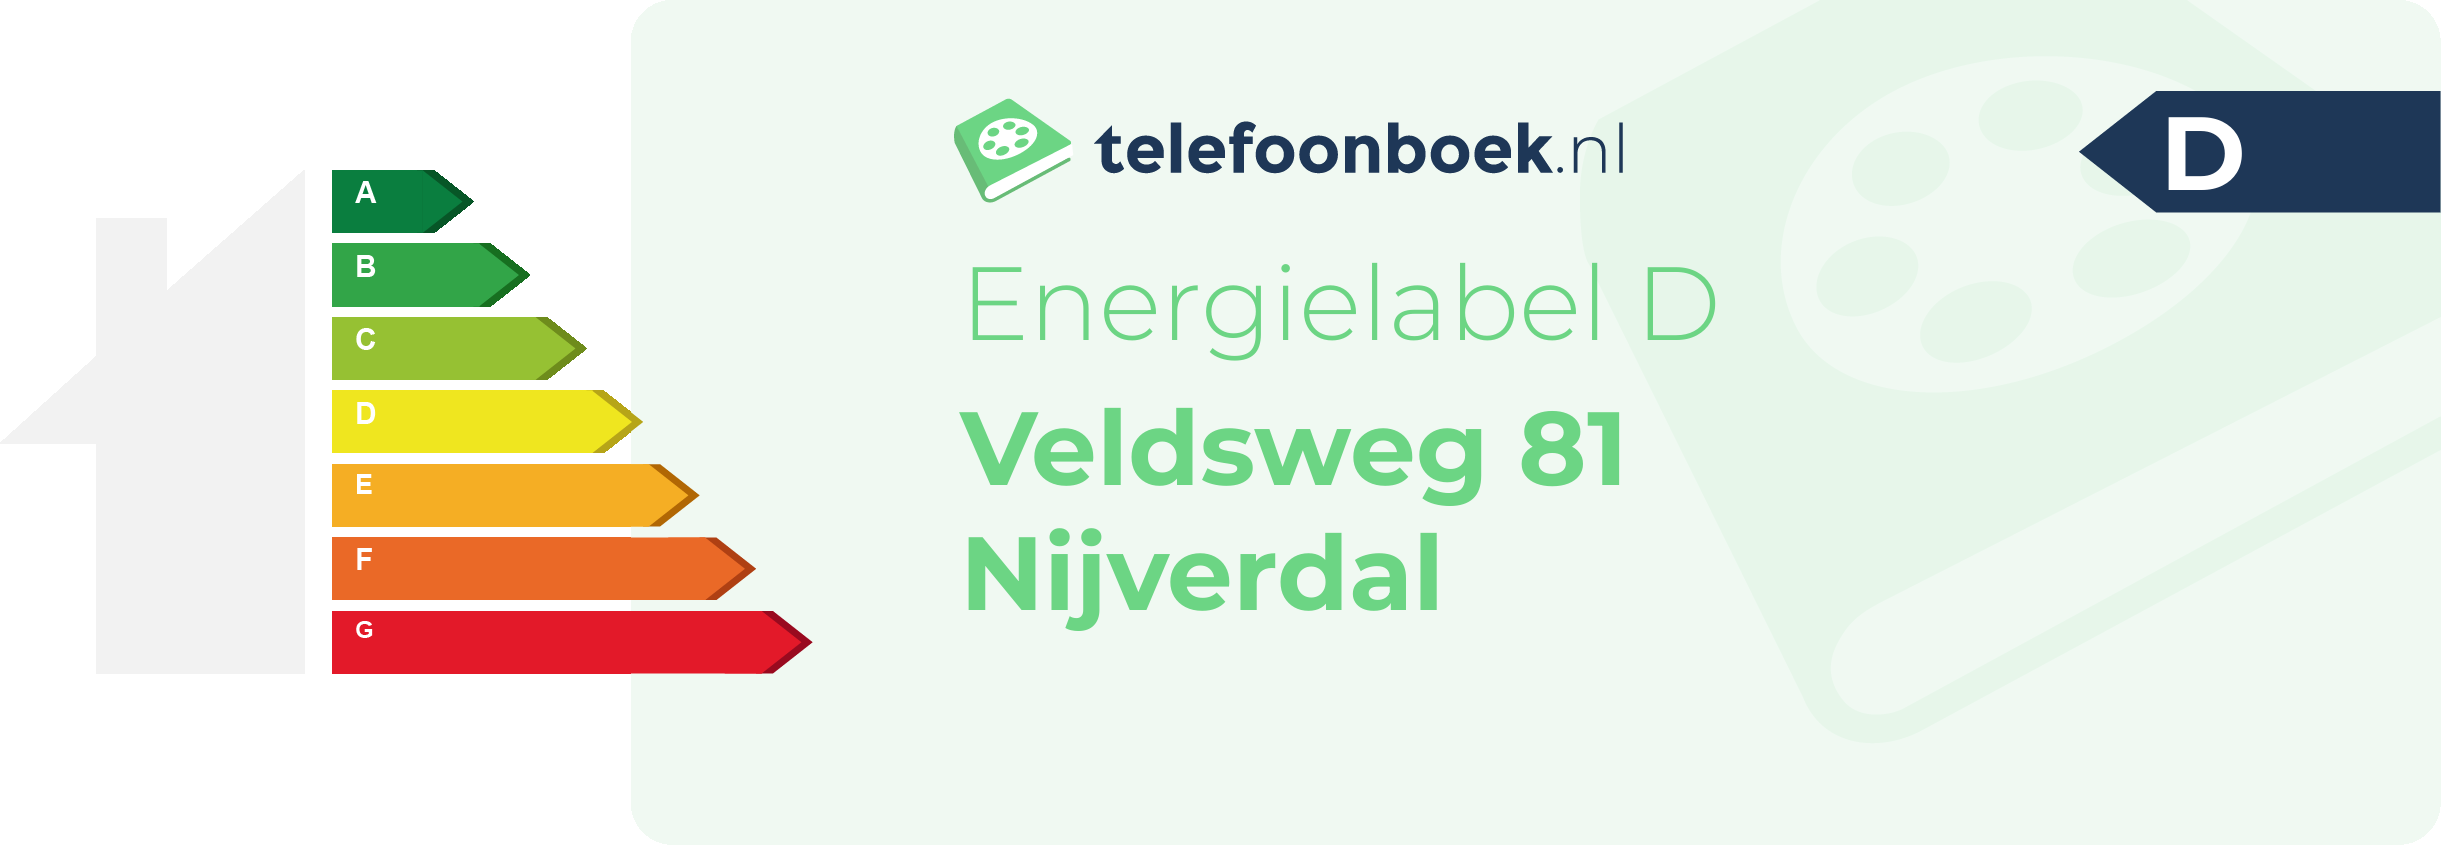 Energielabel Veldsweg 81 Nijverdal